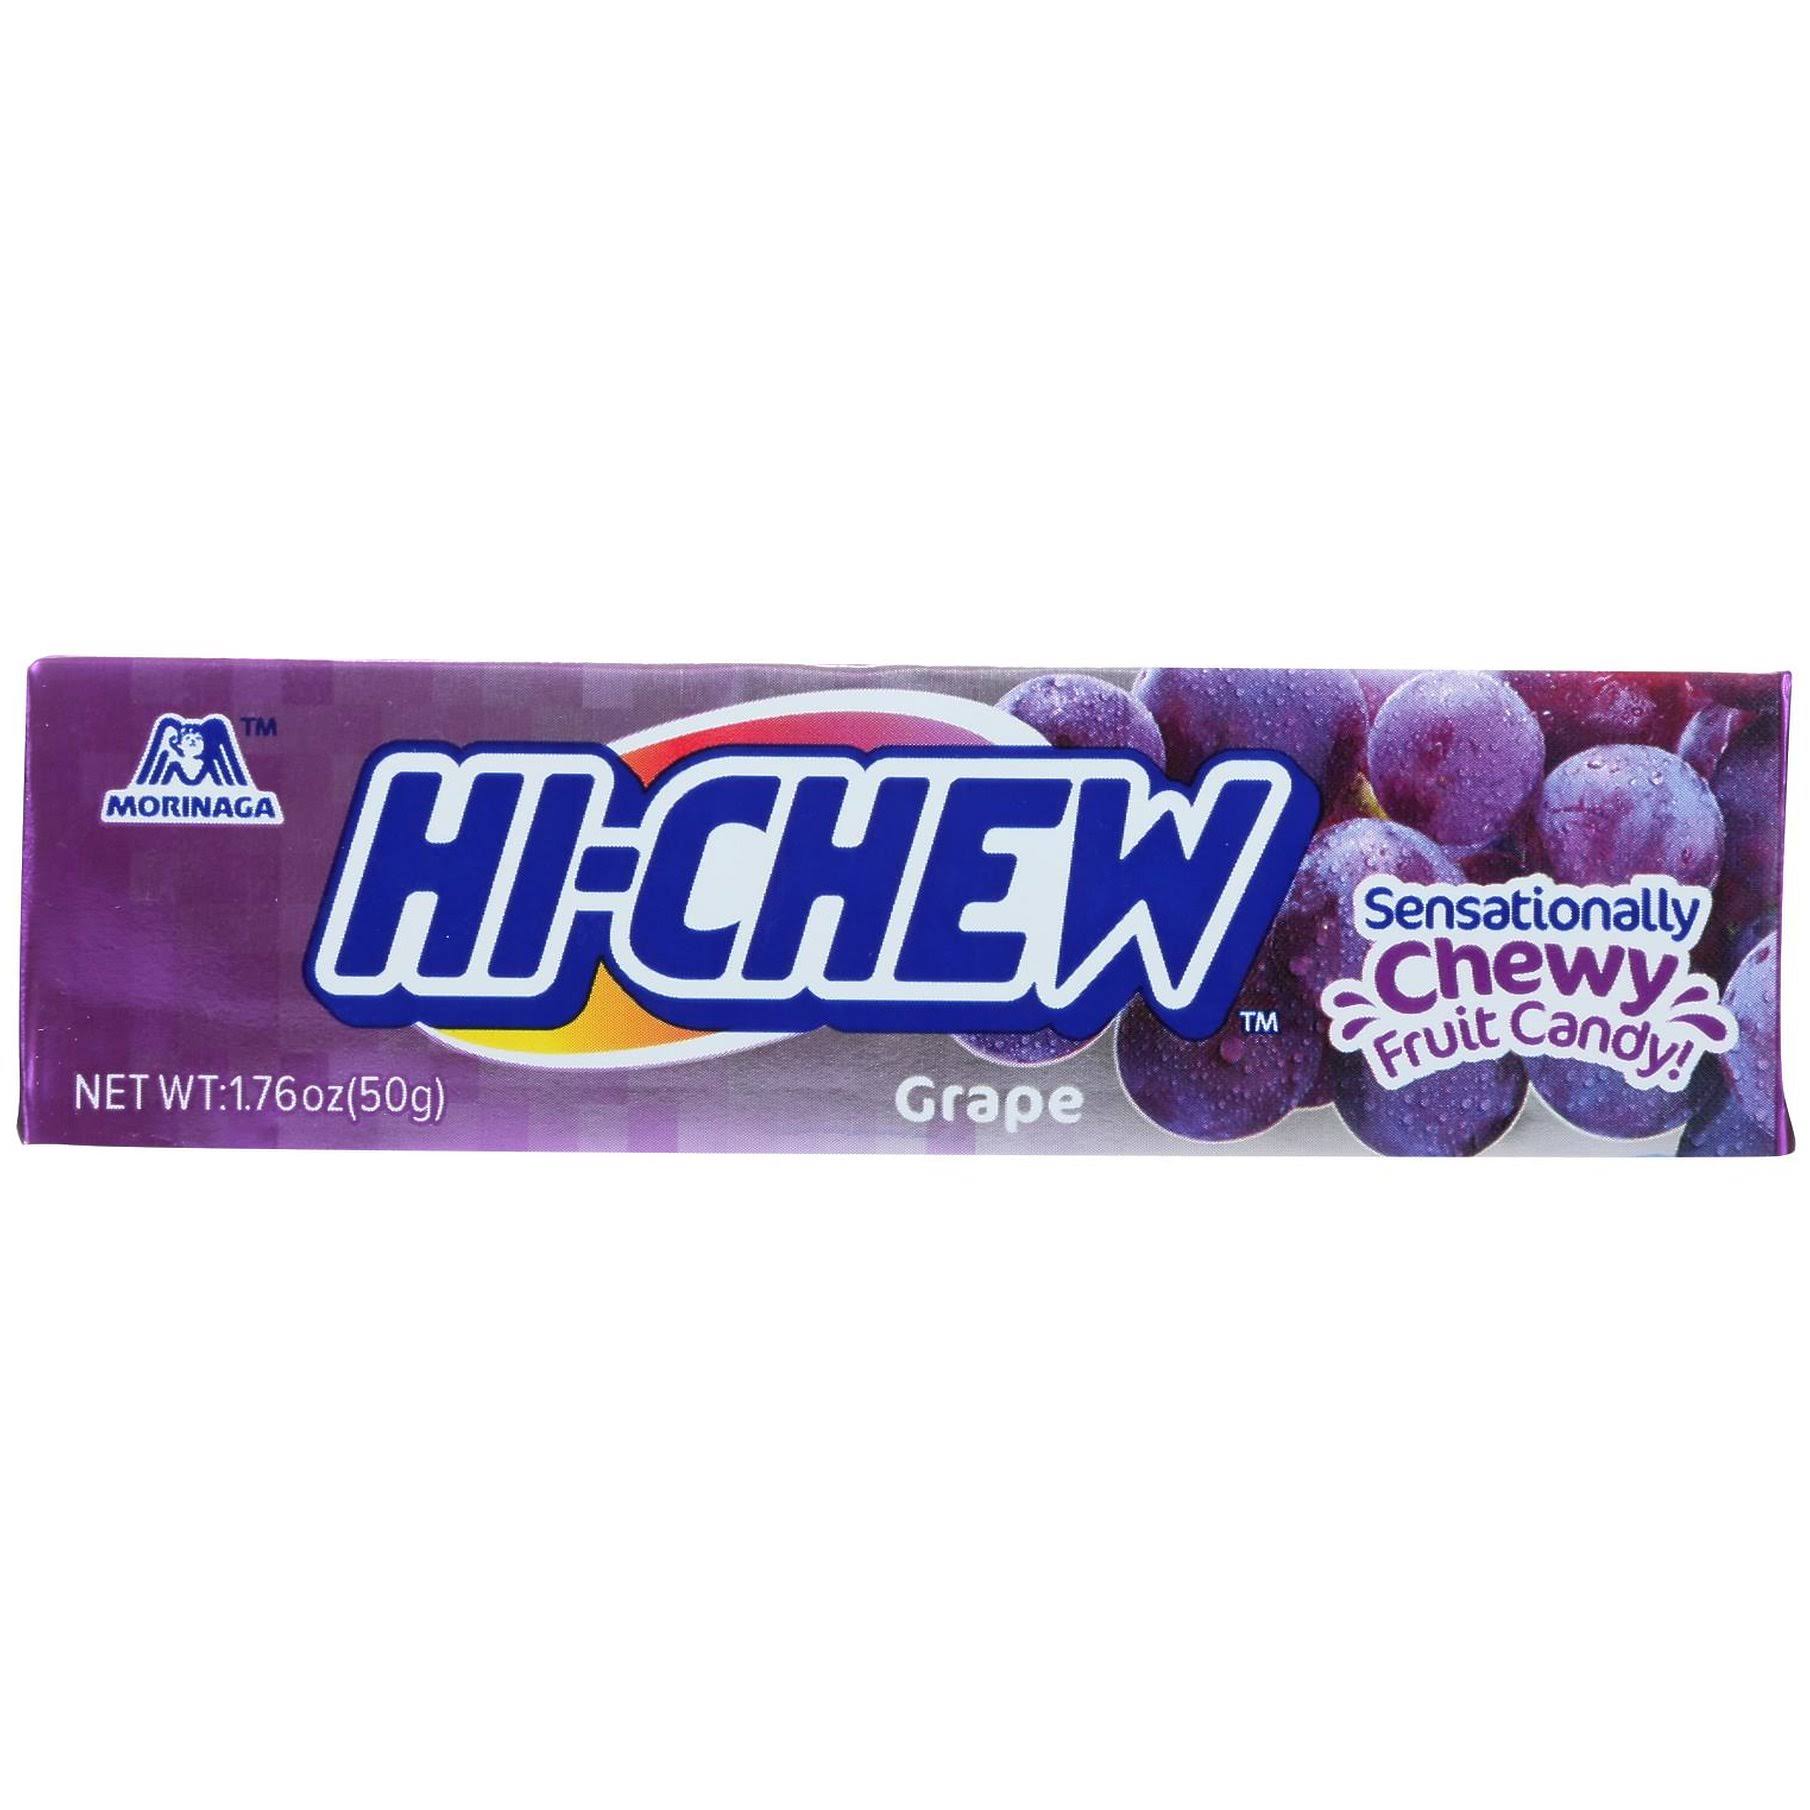 Hi-Chew Fruit Chews - Grape, 50g